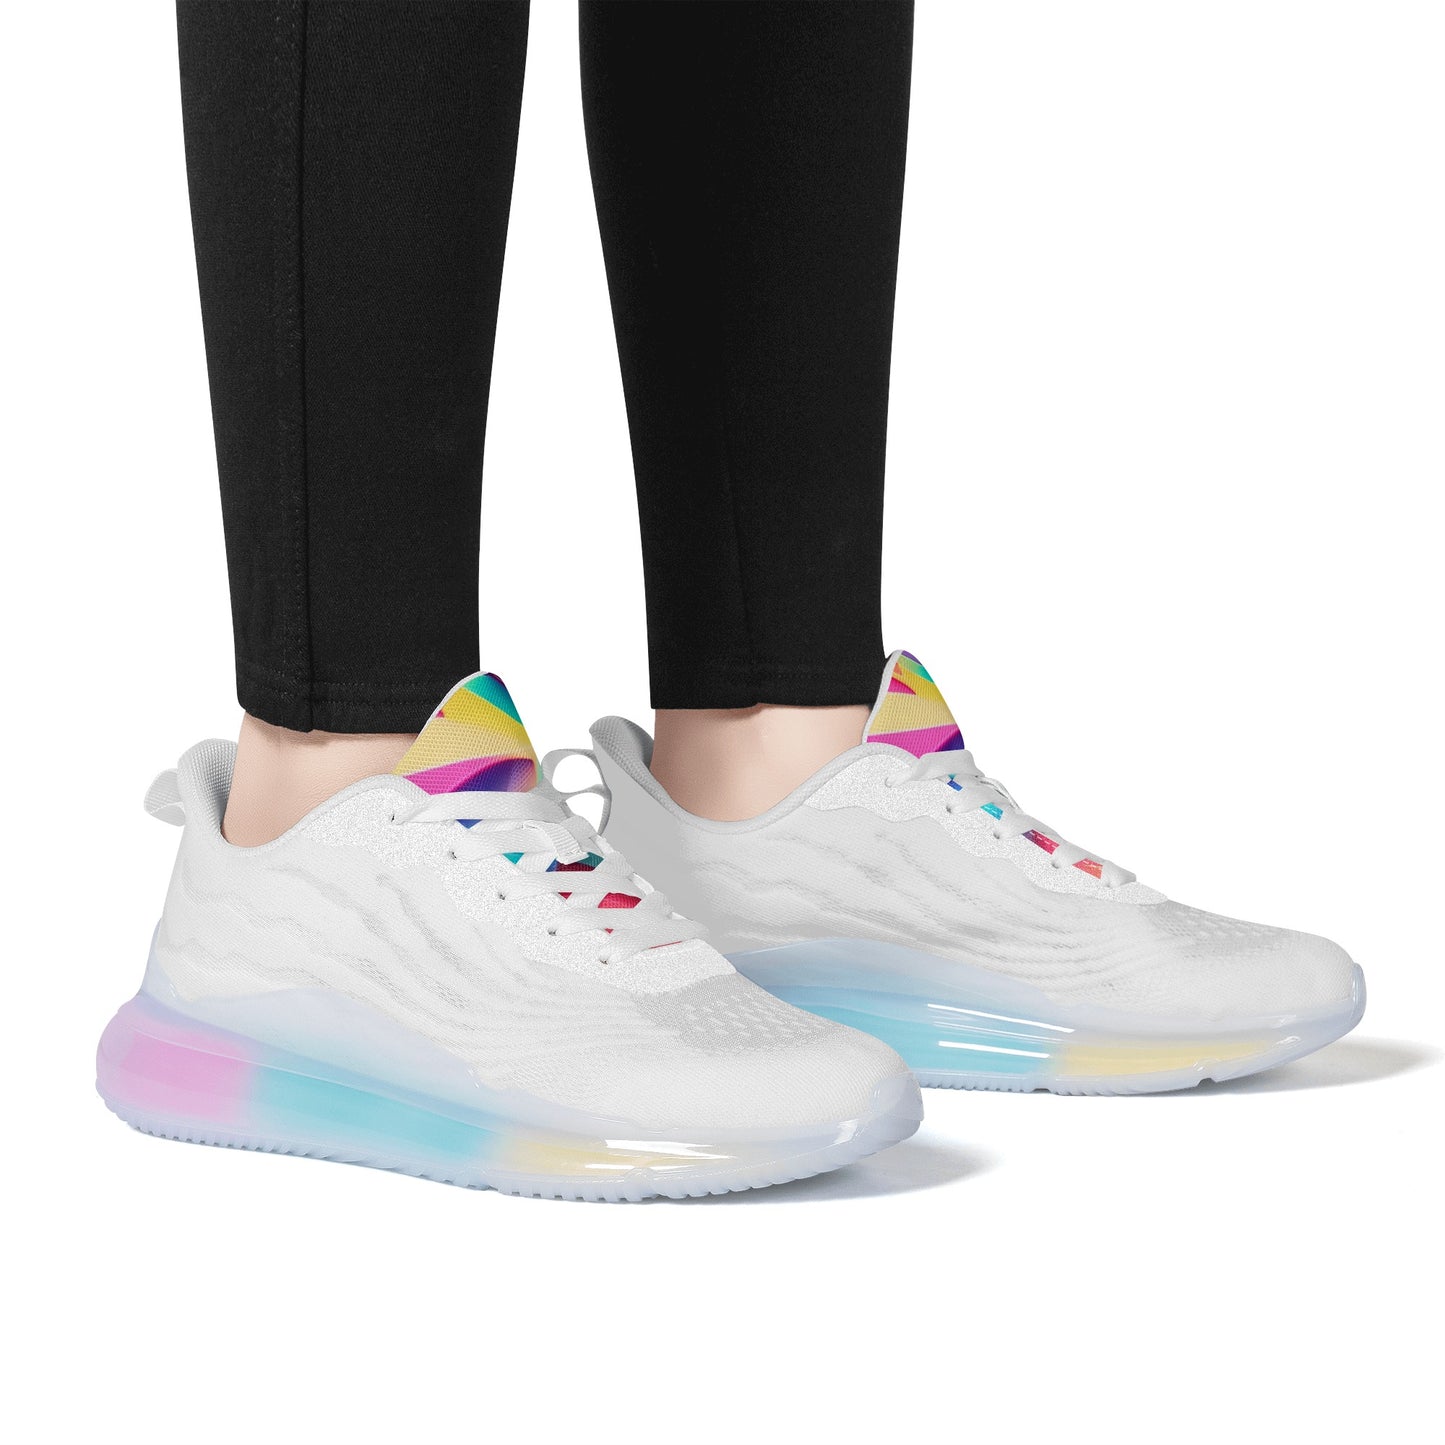 ANBC Womens Rainbow Atmospheric Cushion Running Shoes